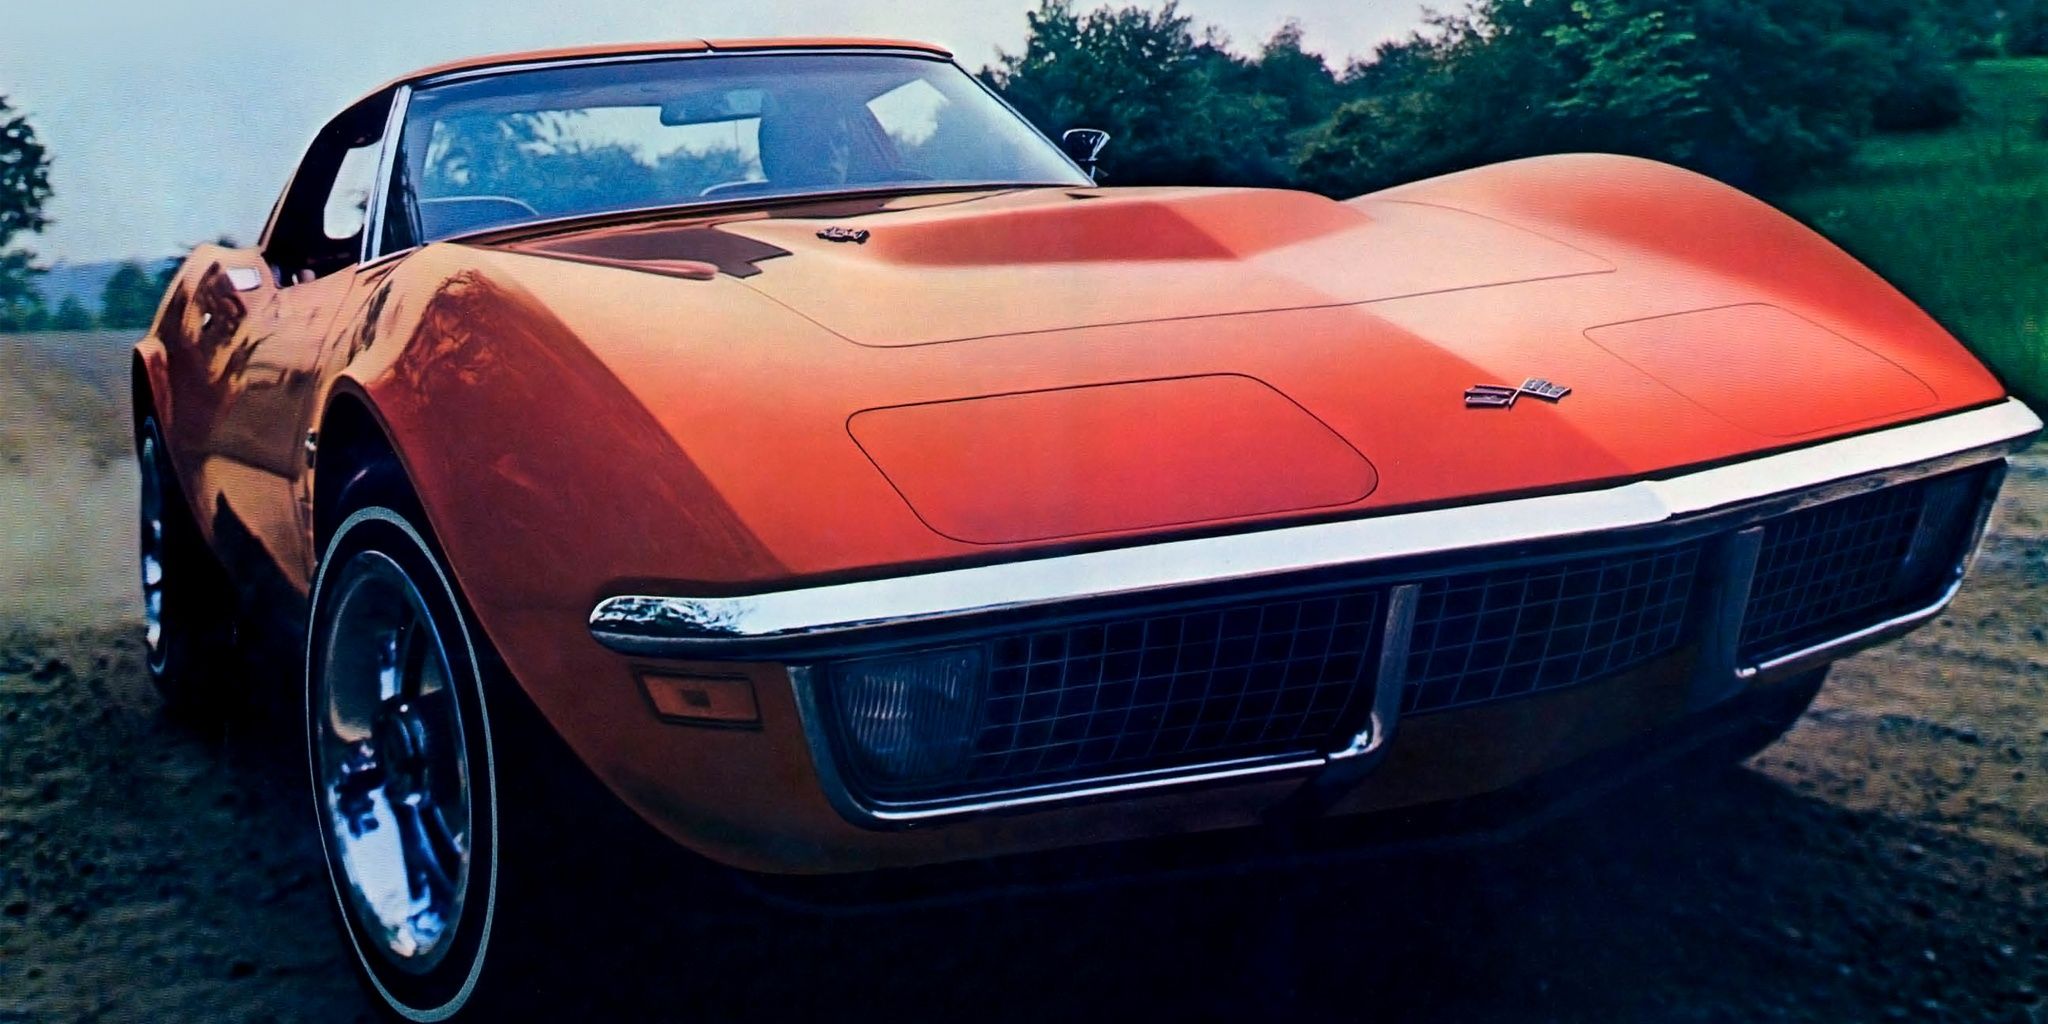 A close up shot of a red 1971 C3 Chevrolet Corvette